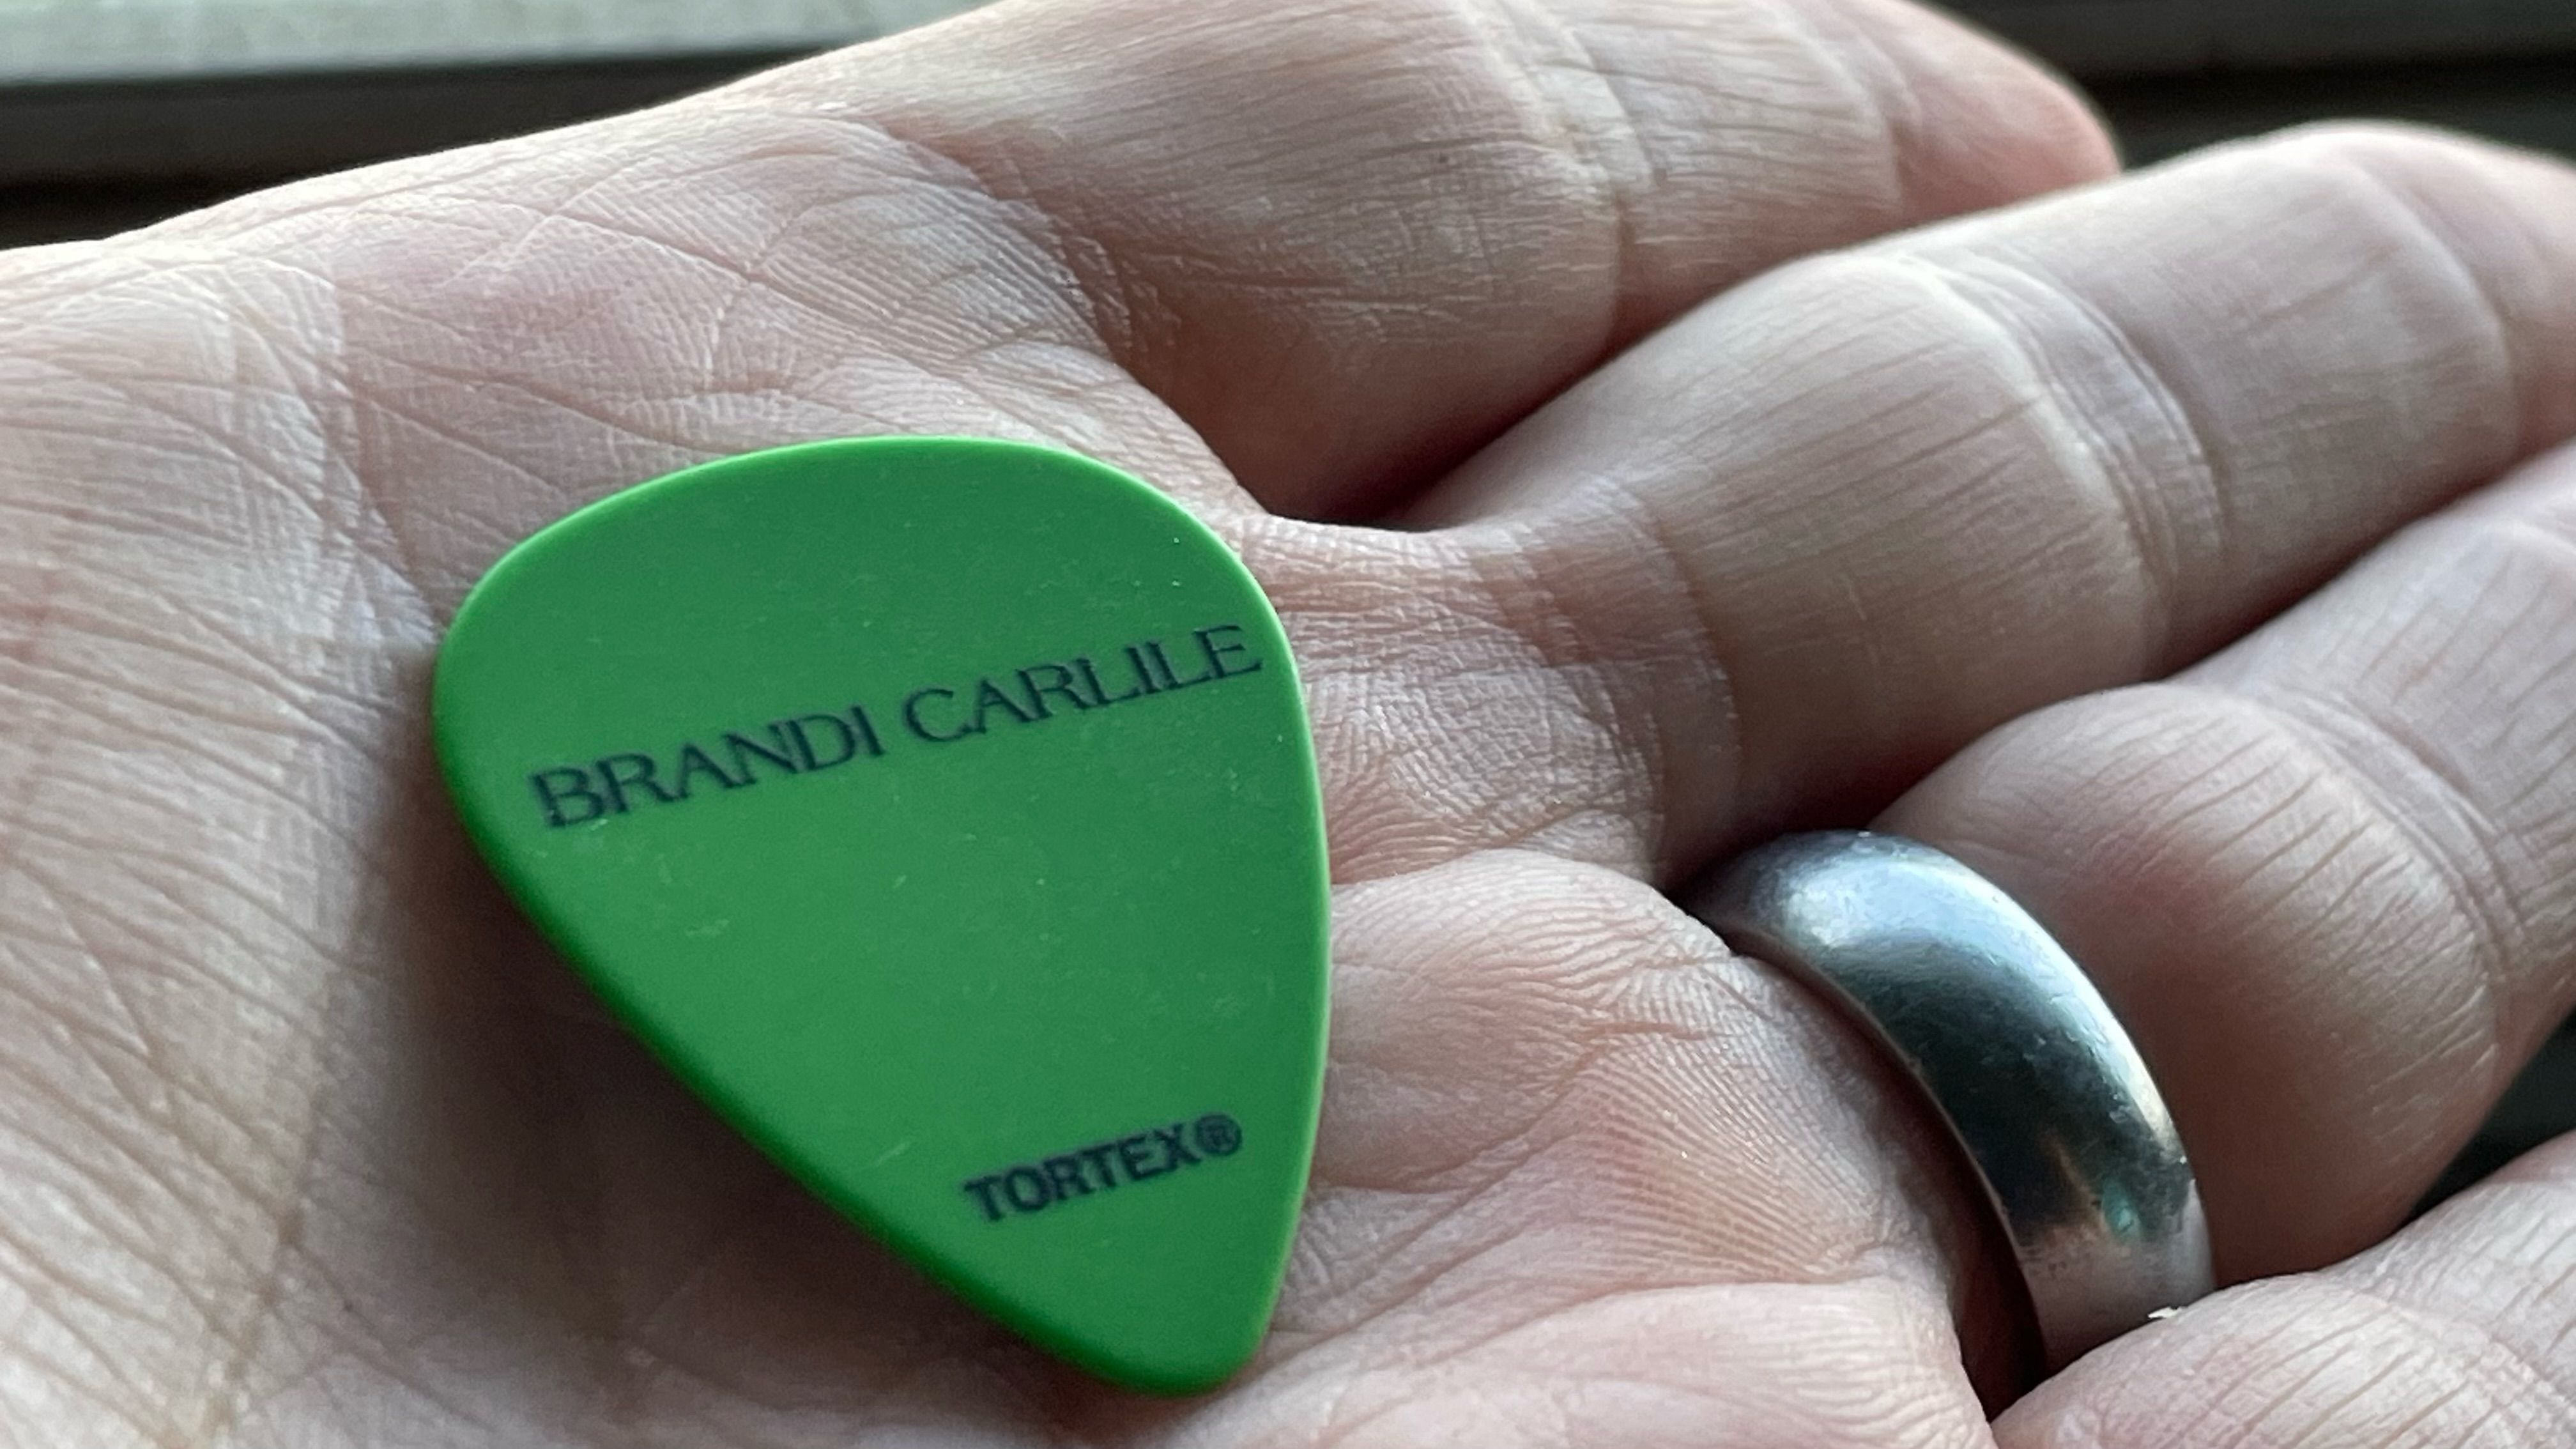 A photo of Brandi Carlile's guitar pick.